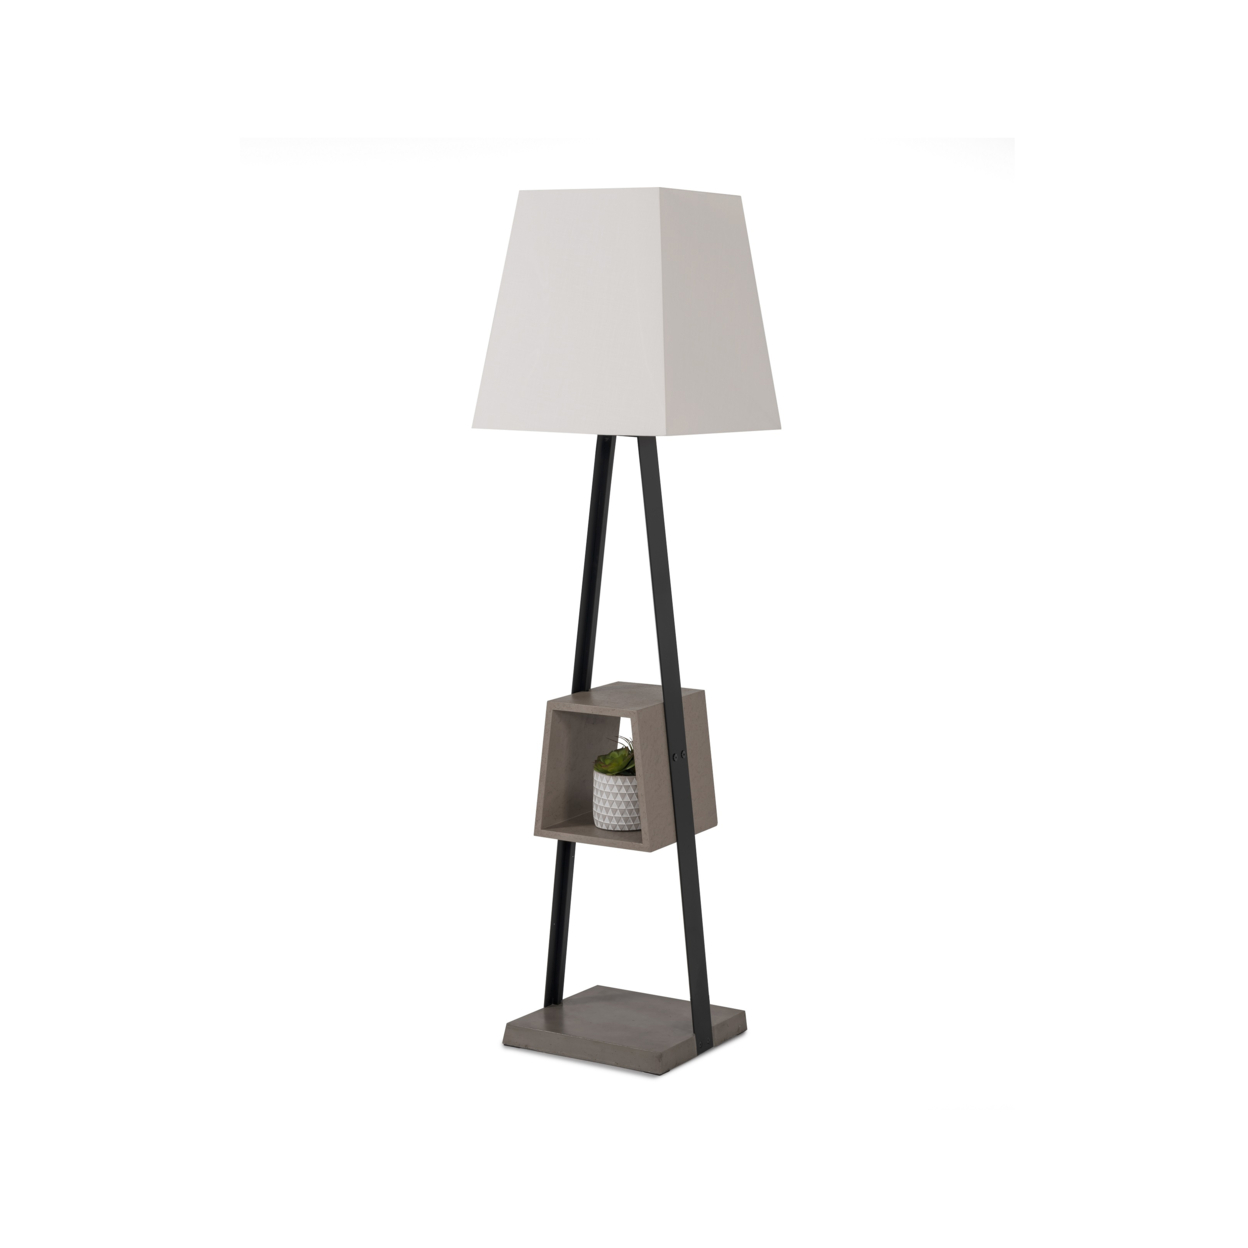 Metal Floor Lamp With Tubular Legs And Rectangular Base, White And Gray- Saltoro Sherpi